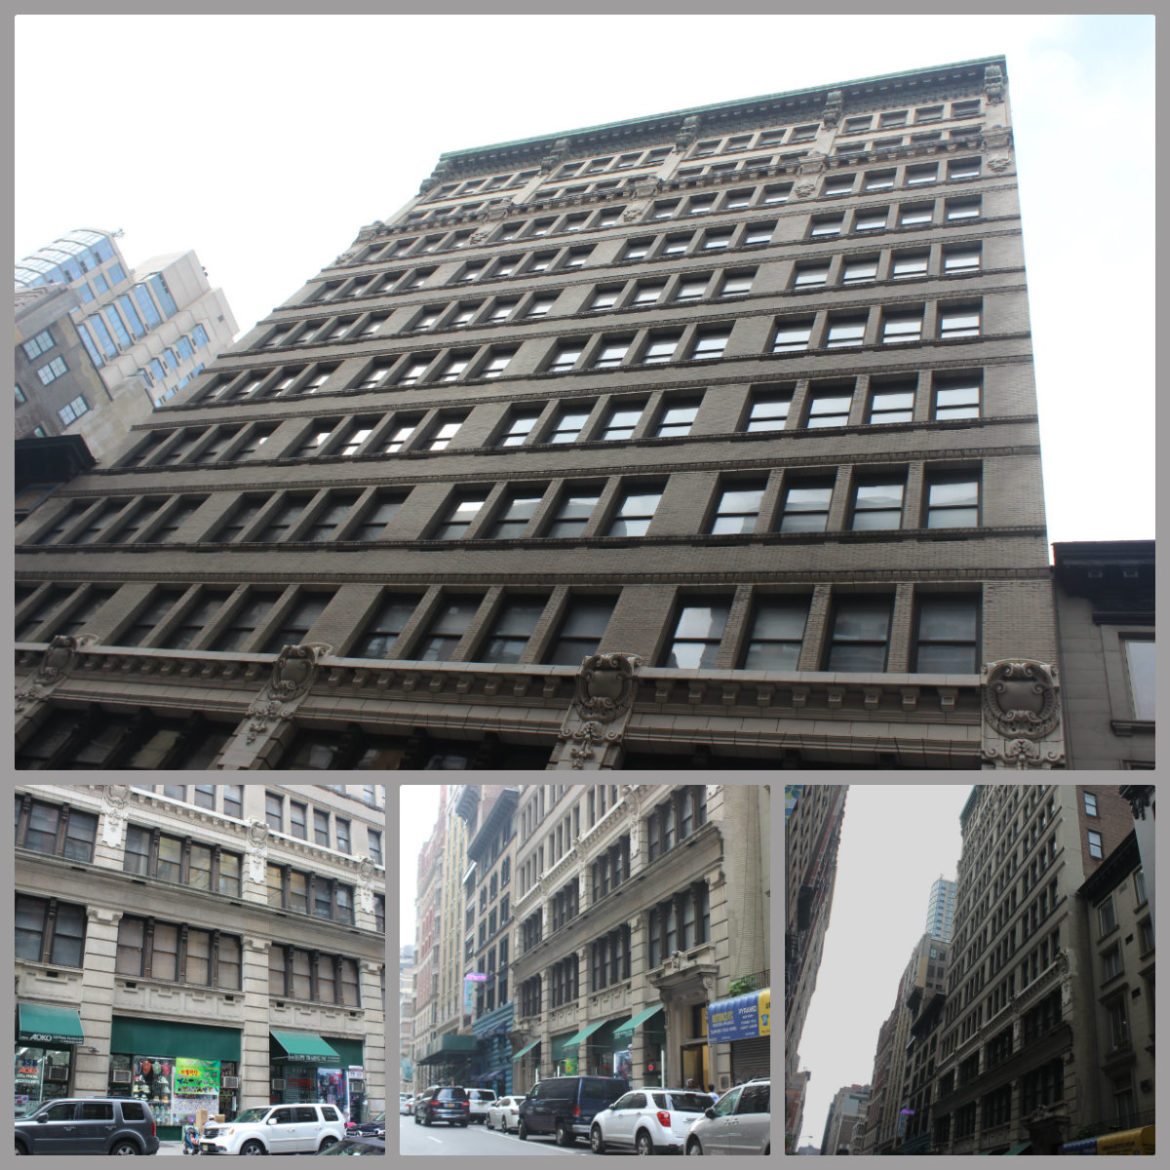 Michael谈纽约商业地产：西27街31号写字楼1.26亿美元售出 竟高出原价1100万美元